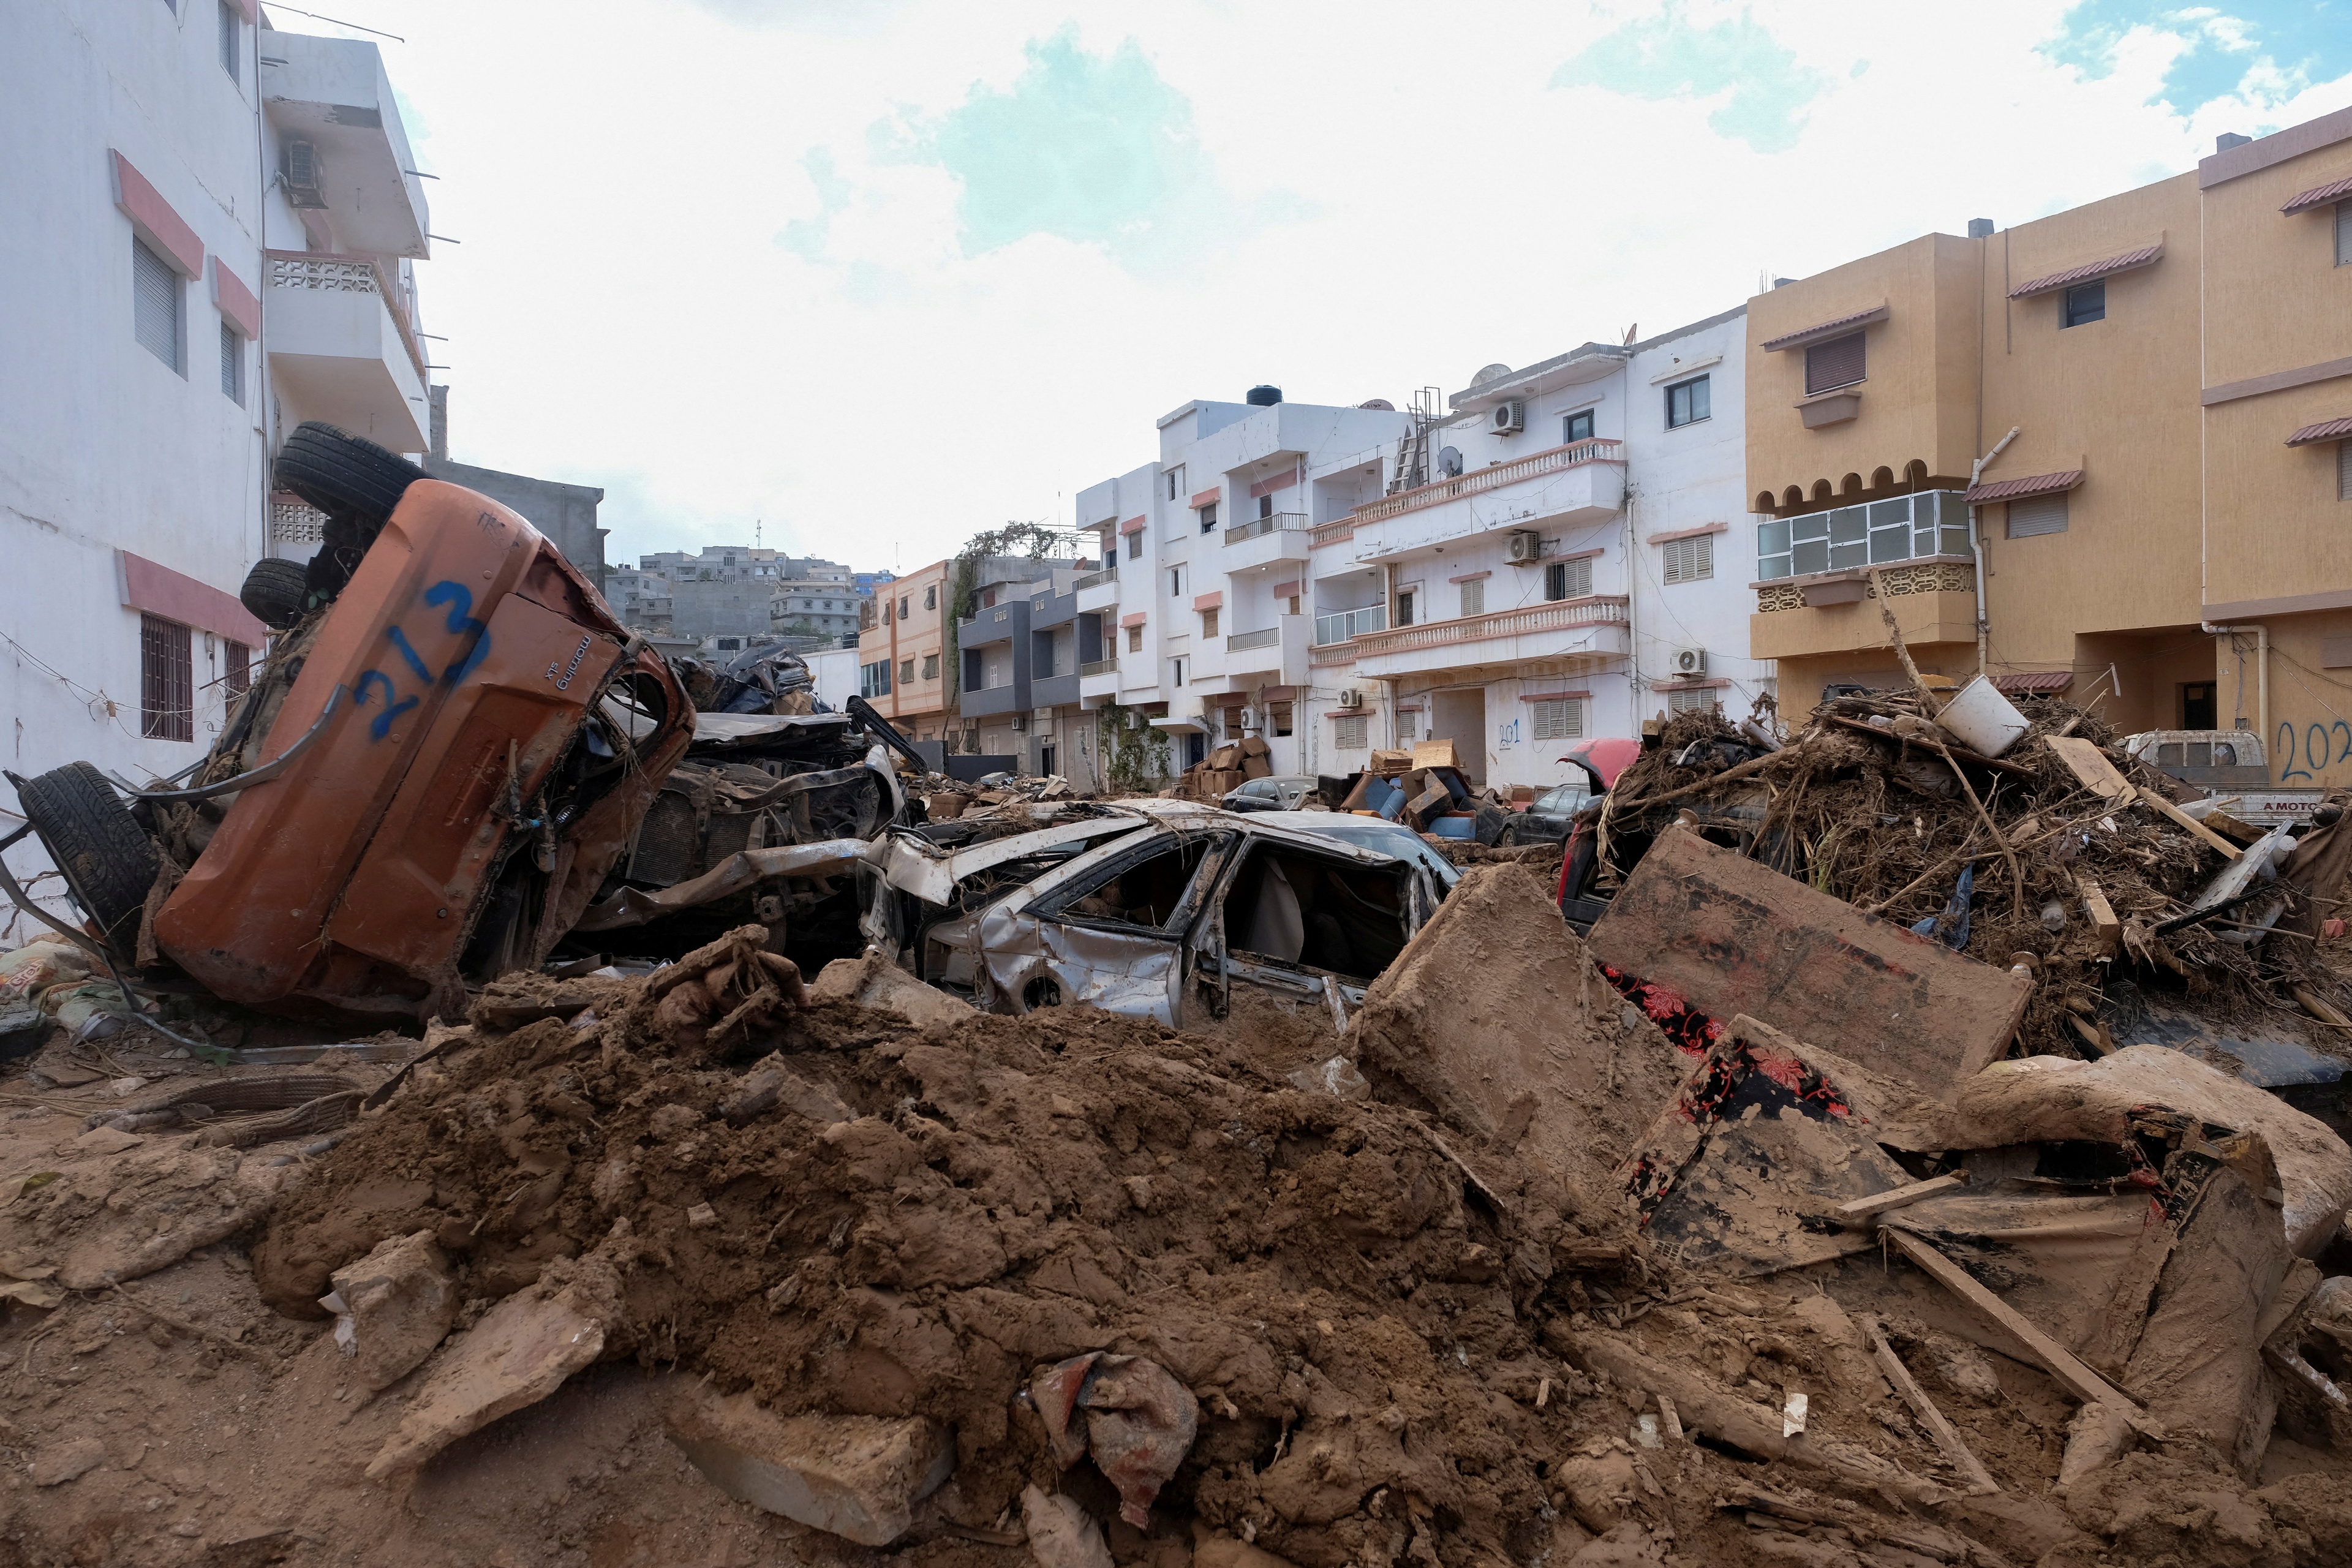 FILE PHOTO: A view shows damaged cars that were impacted by fatal floods in Derna, Libya, September 28, 2023. REUTERS/Esam Omran Al-Fetori